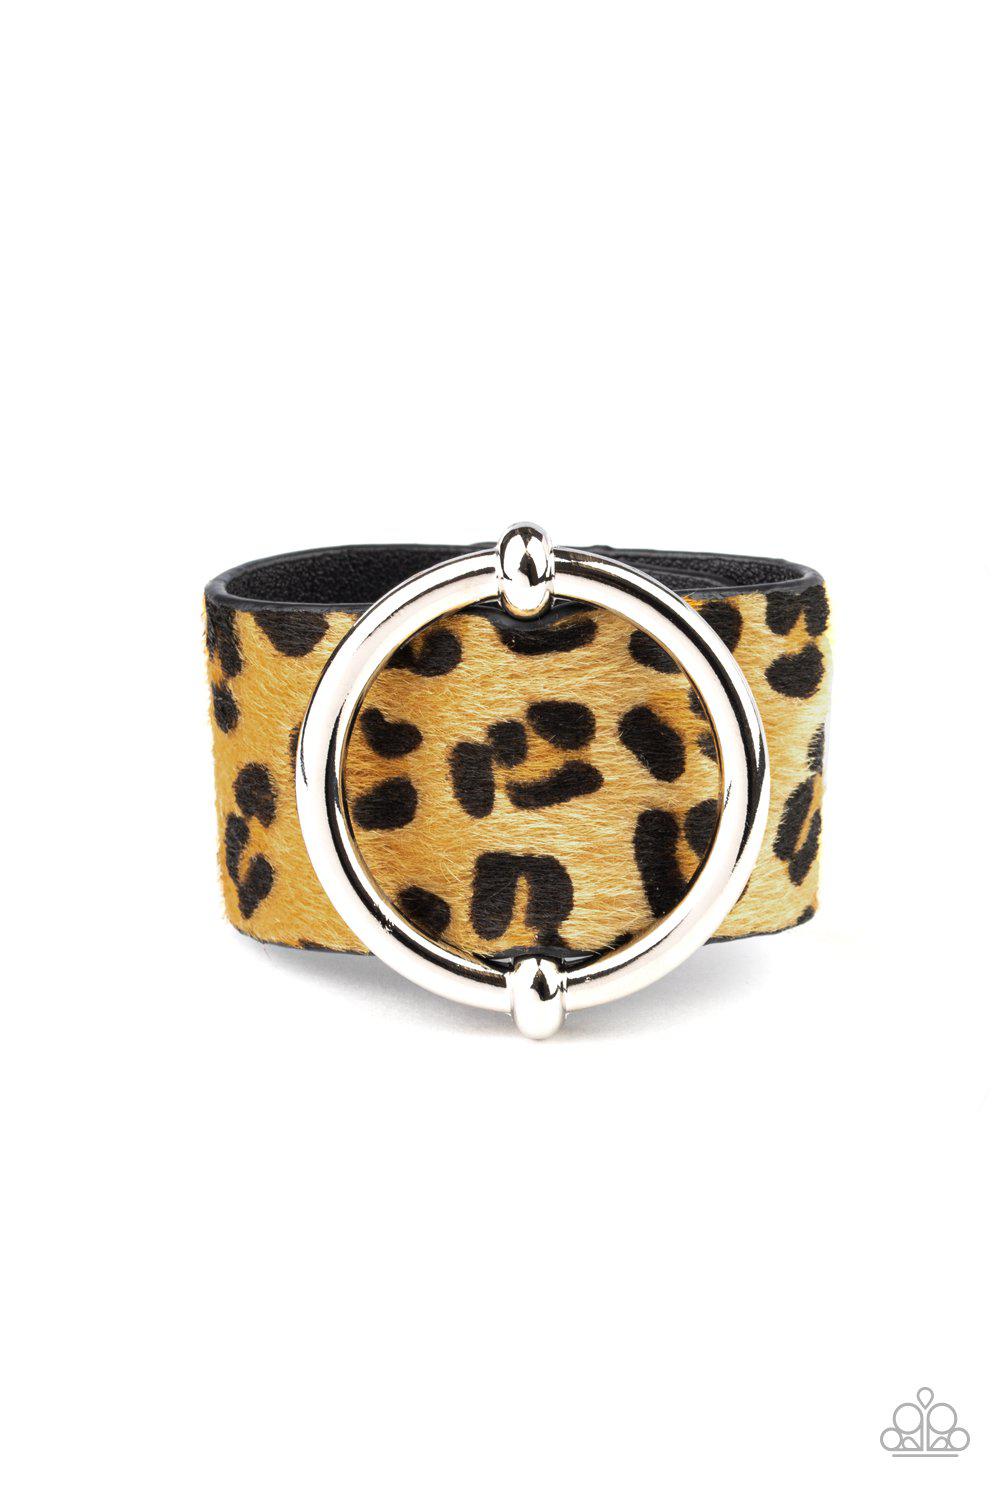 Asking FUR Trouble Yellow Cheetah Print Urban Wrap Snap Bracelet - Paparazzi Accessories-CarasShop.com - $5 Jewelry by Cara Jewels